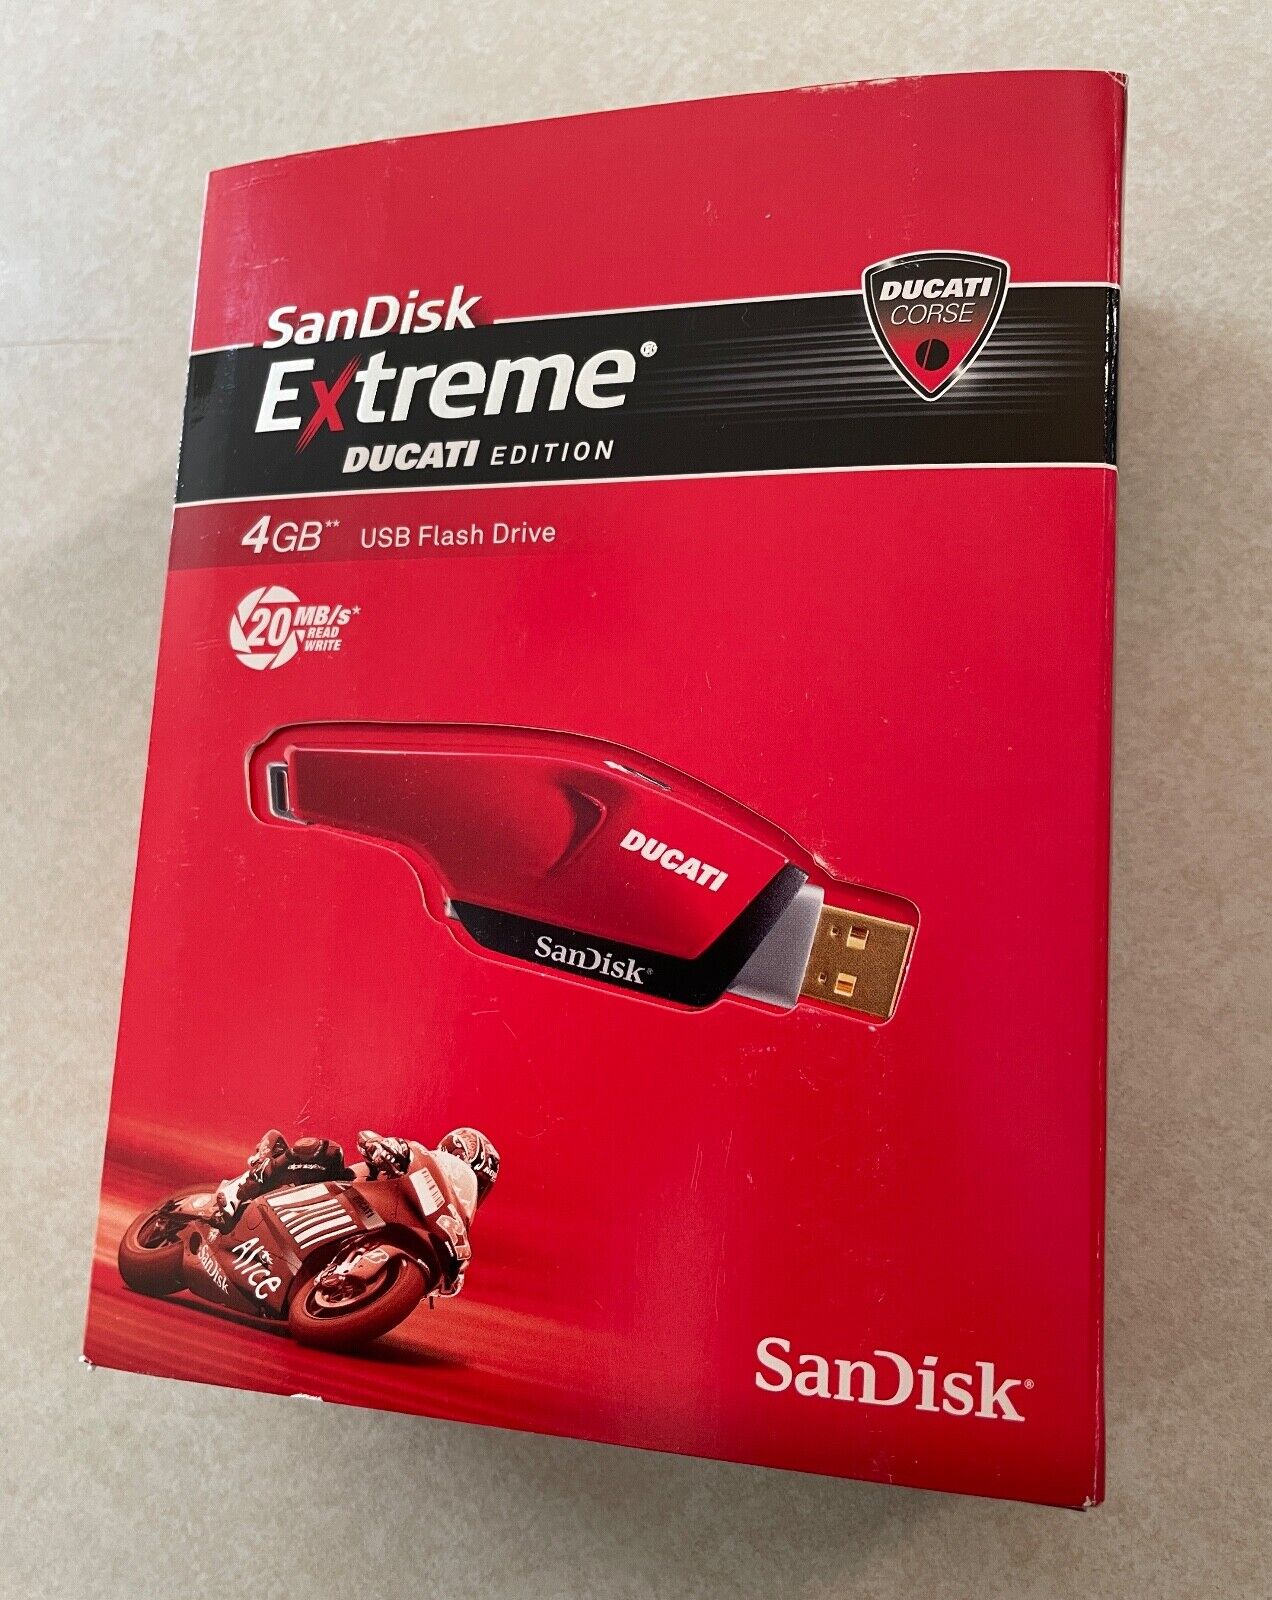 SanDisk Extreme Ducati Edition 4GB USB Flash Drive, lightly used